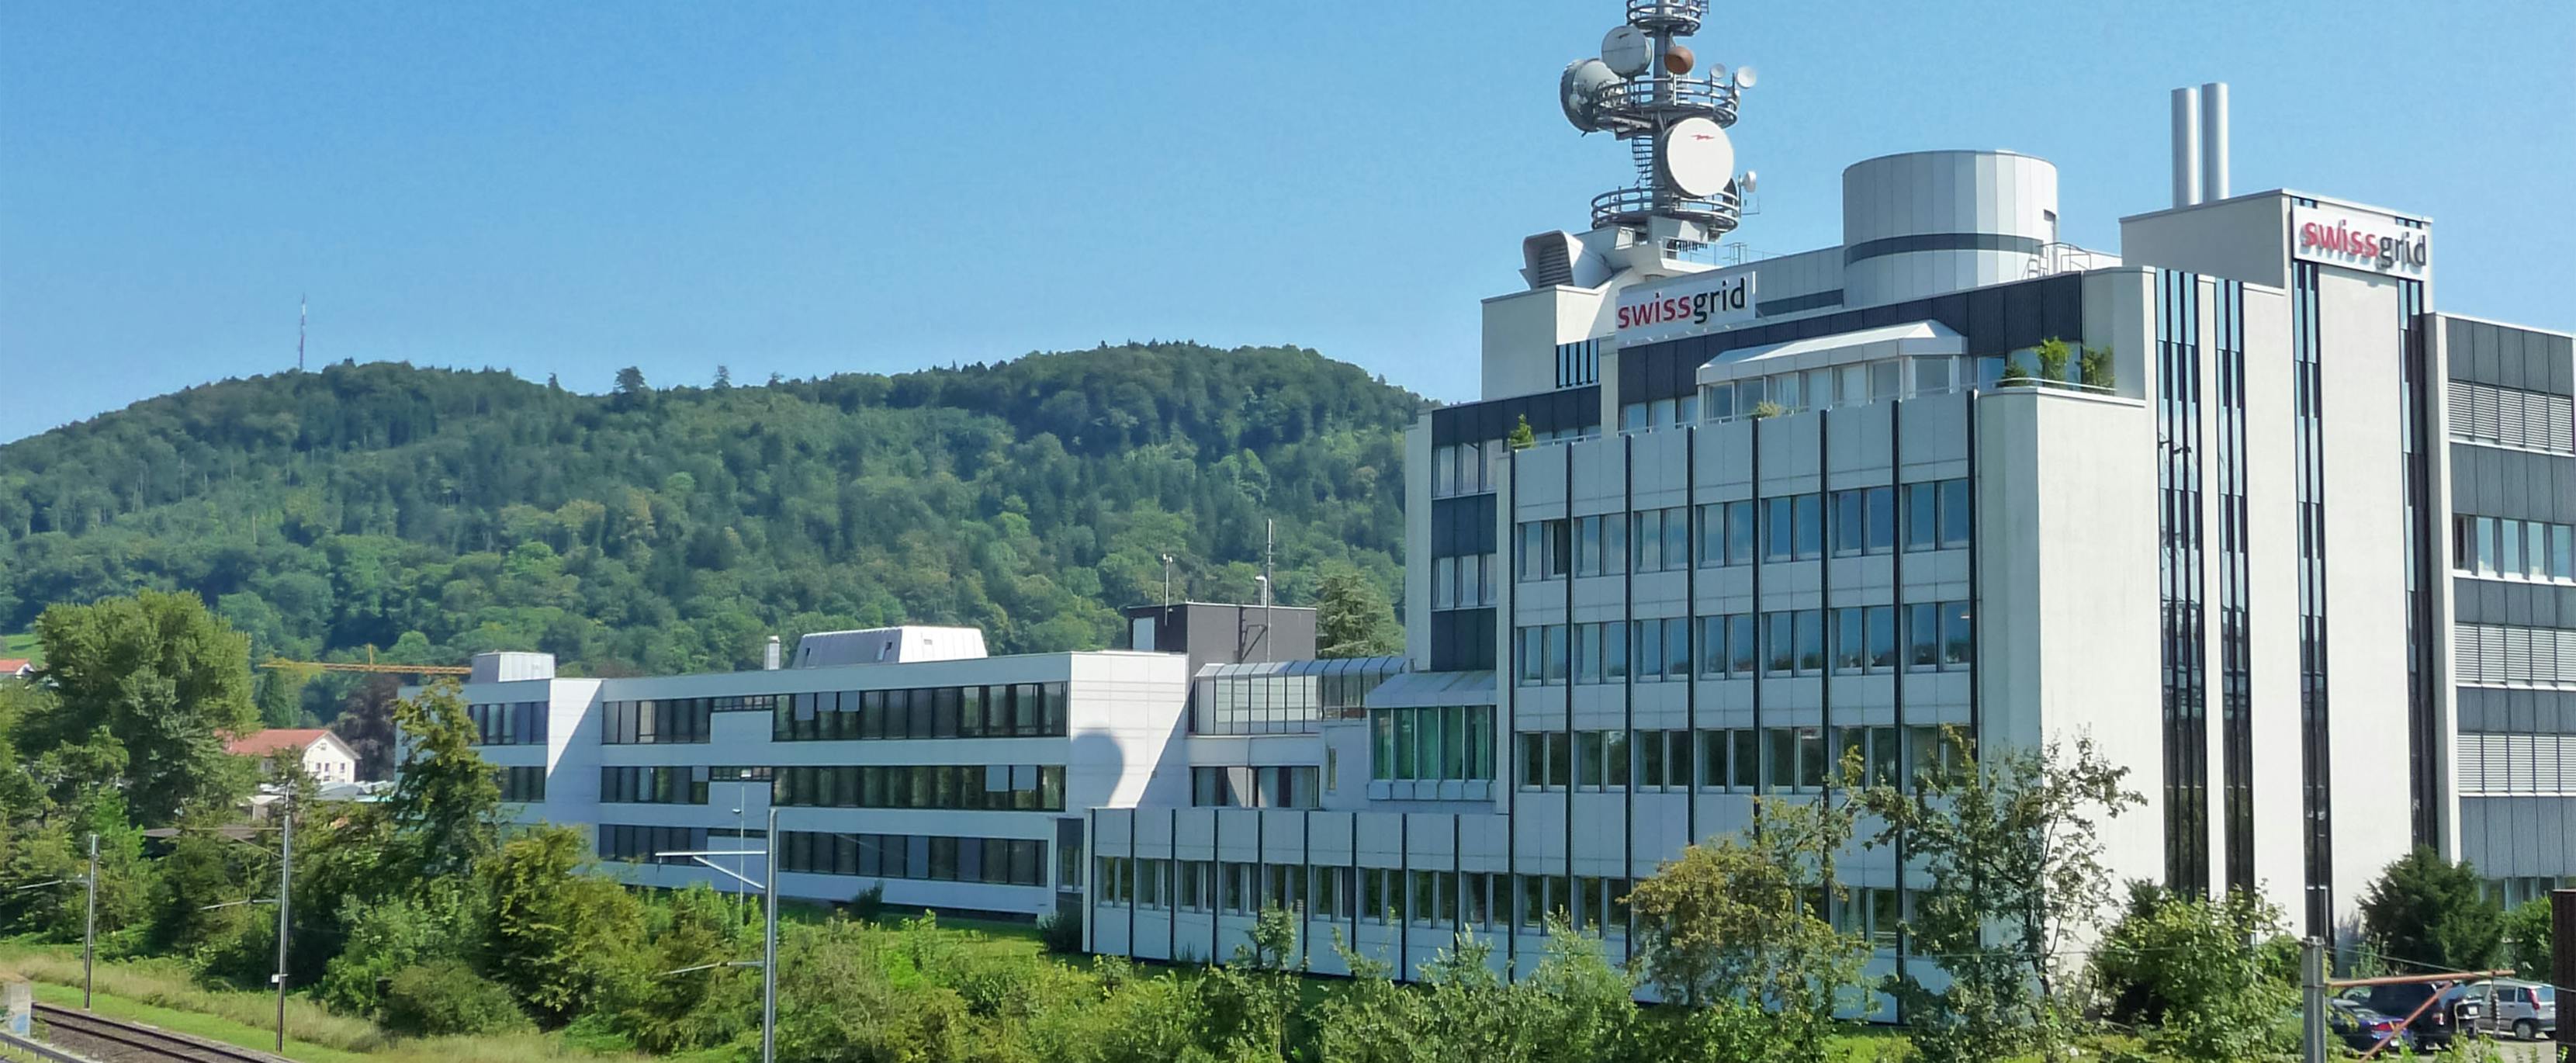 Swissgrid’s first headquarters in Laufenburg (Canton of Aargau)